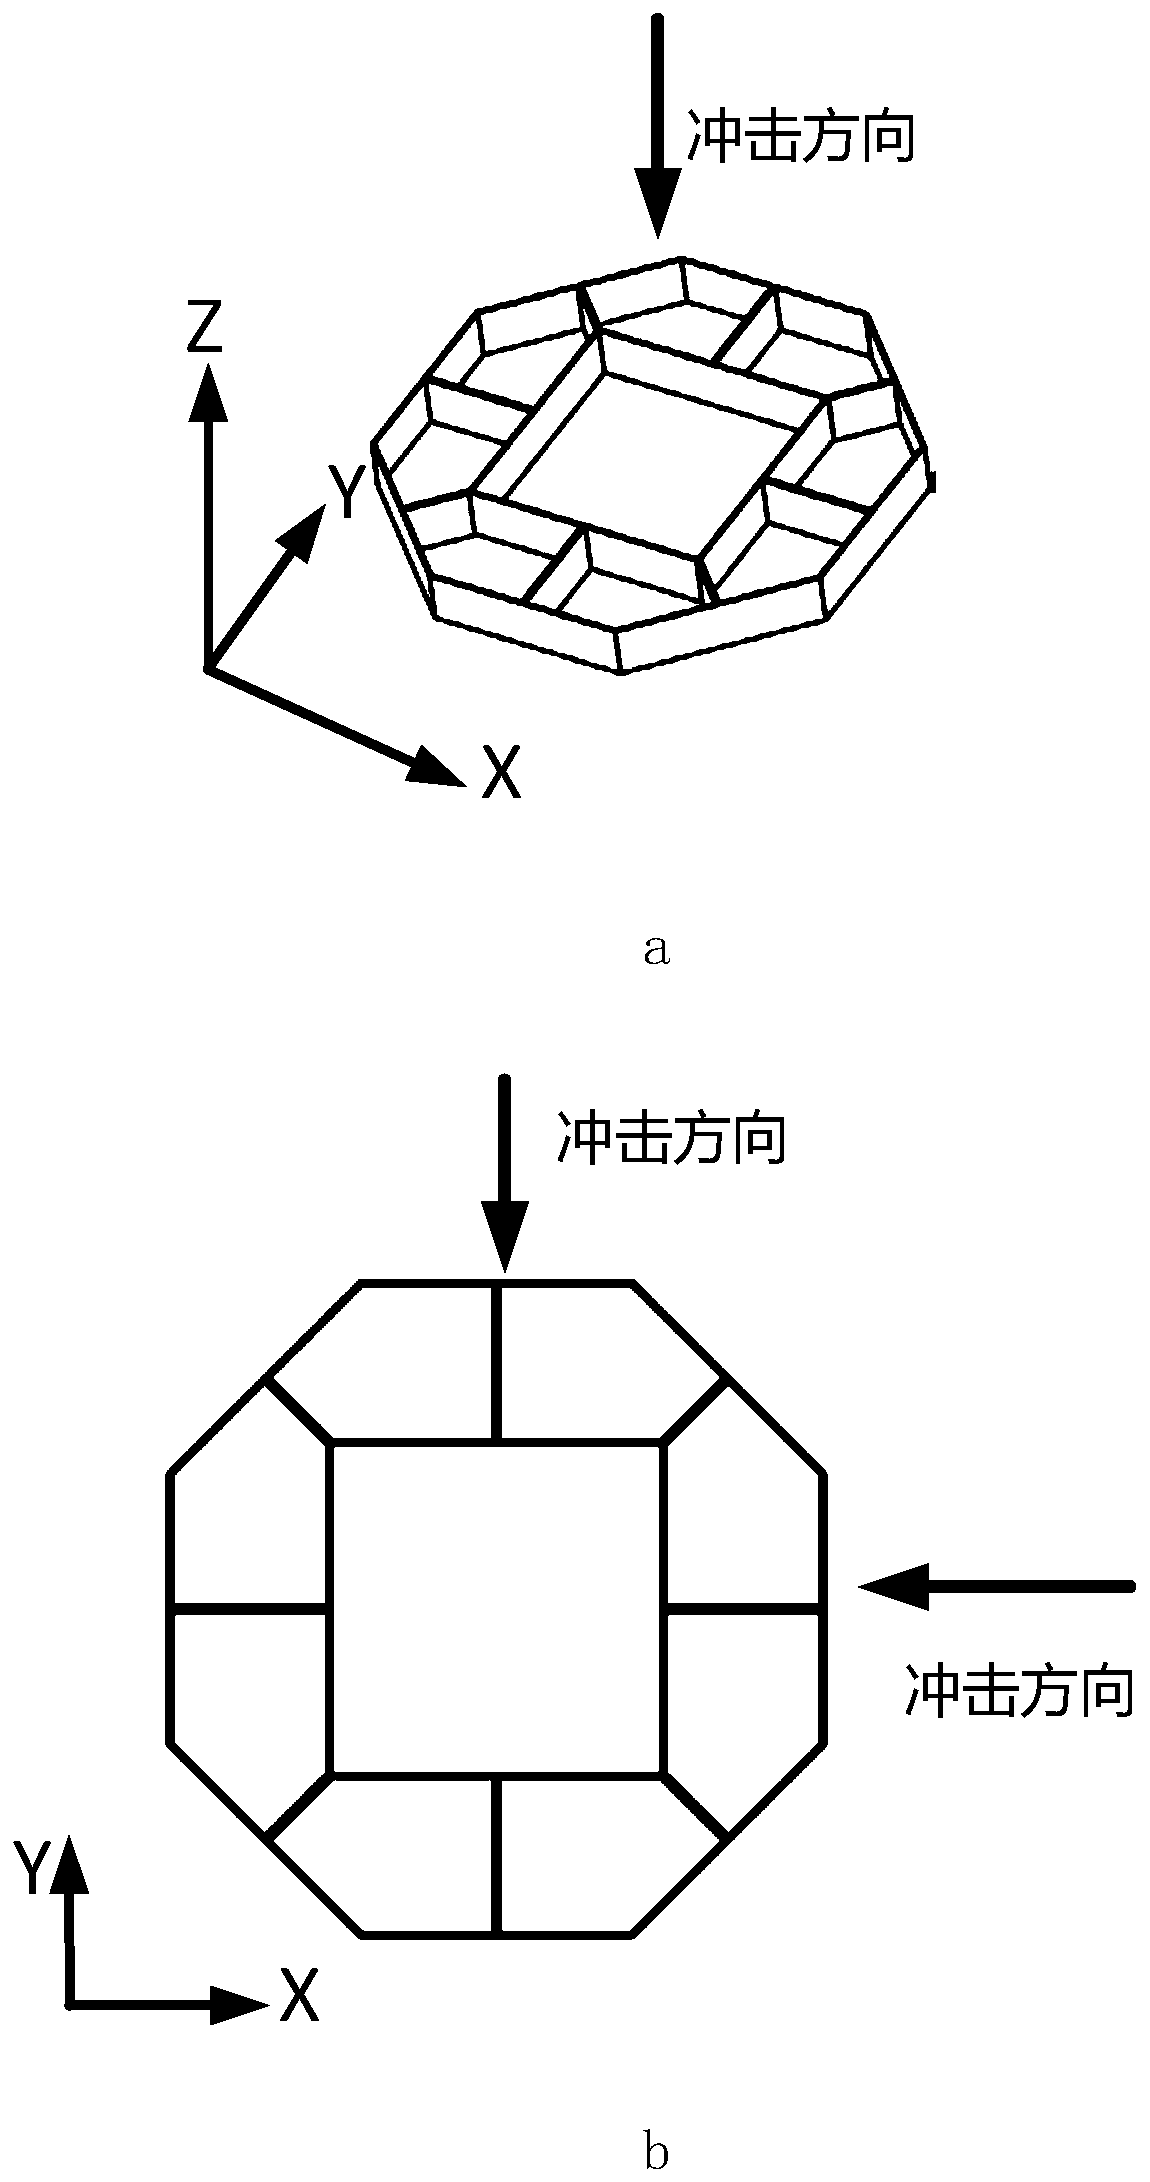 Multidirectional bearing honeycomb structure